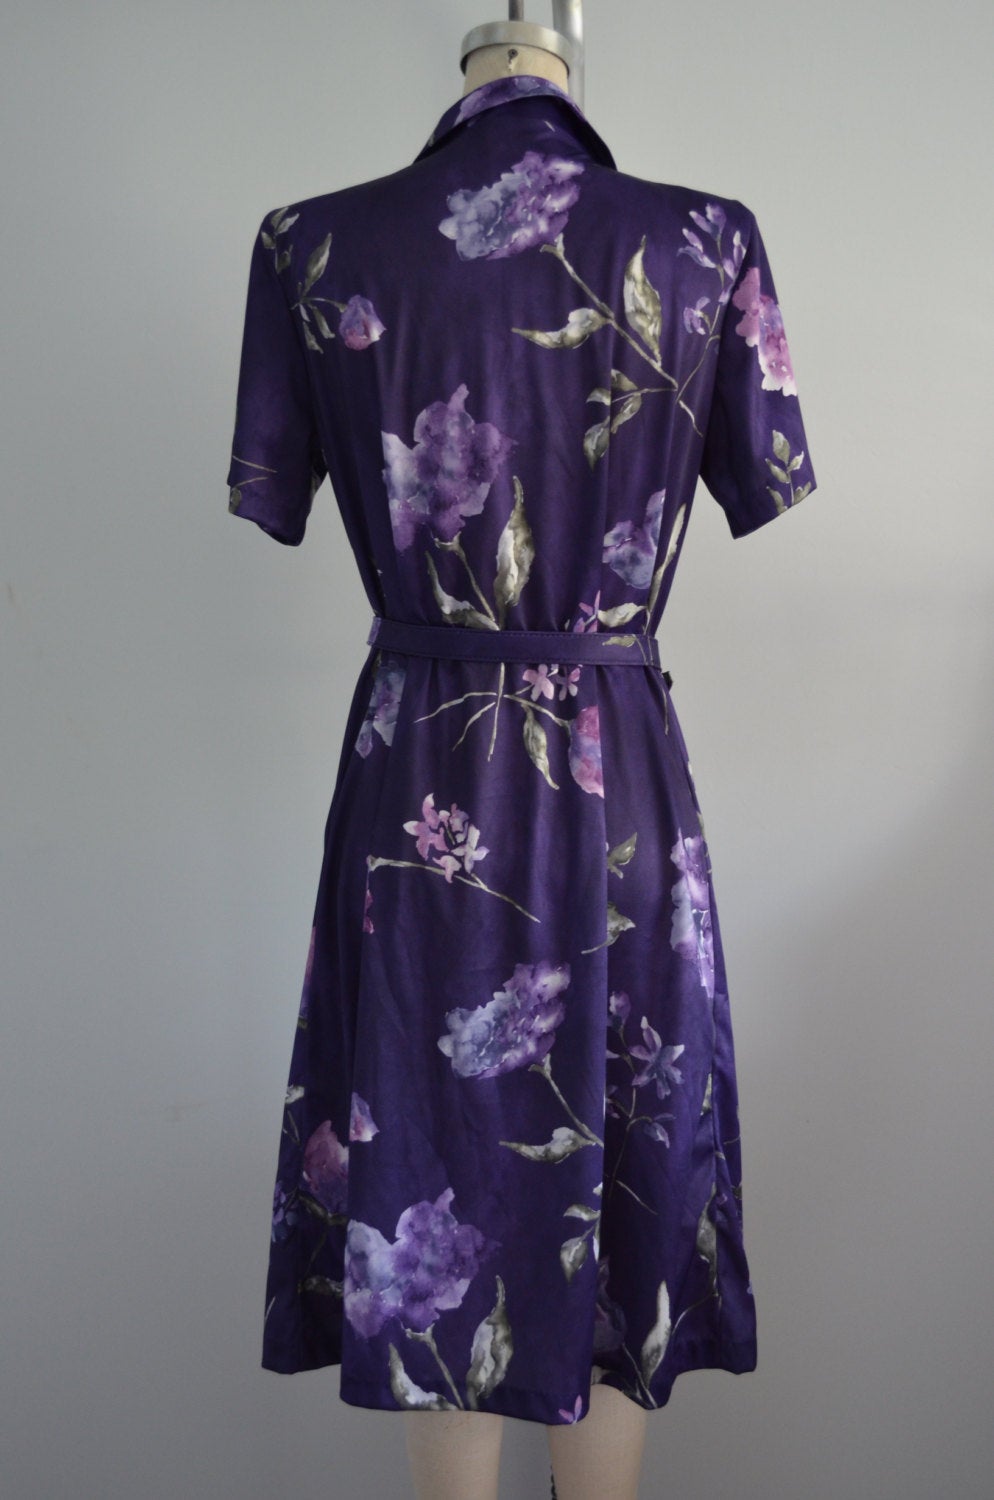 Retro Secretary Anthony Richards Romantic Spring Purple Flower Dress W Matching Belt